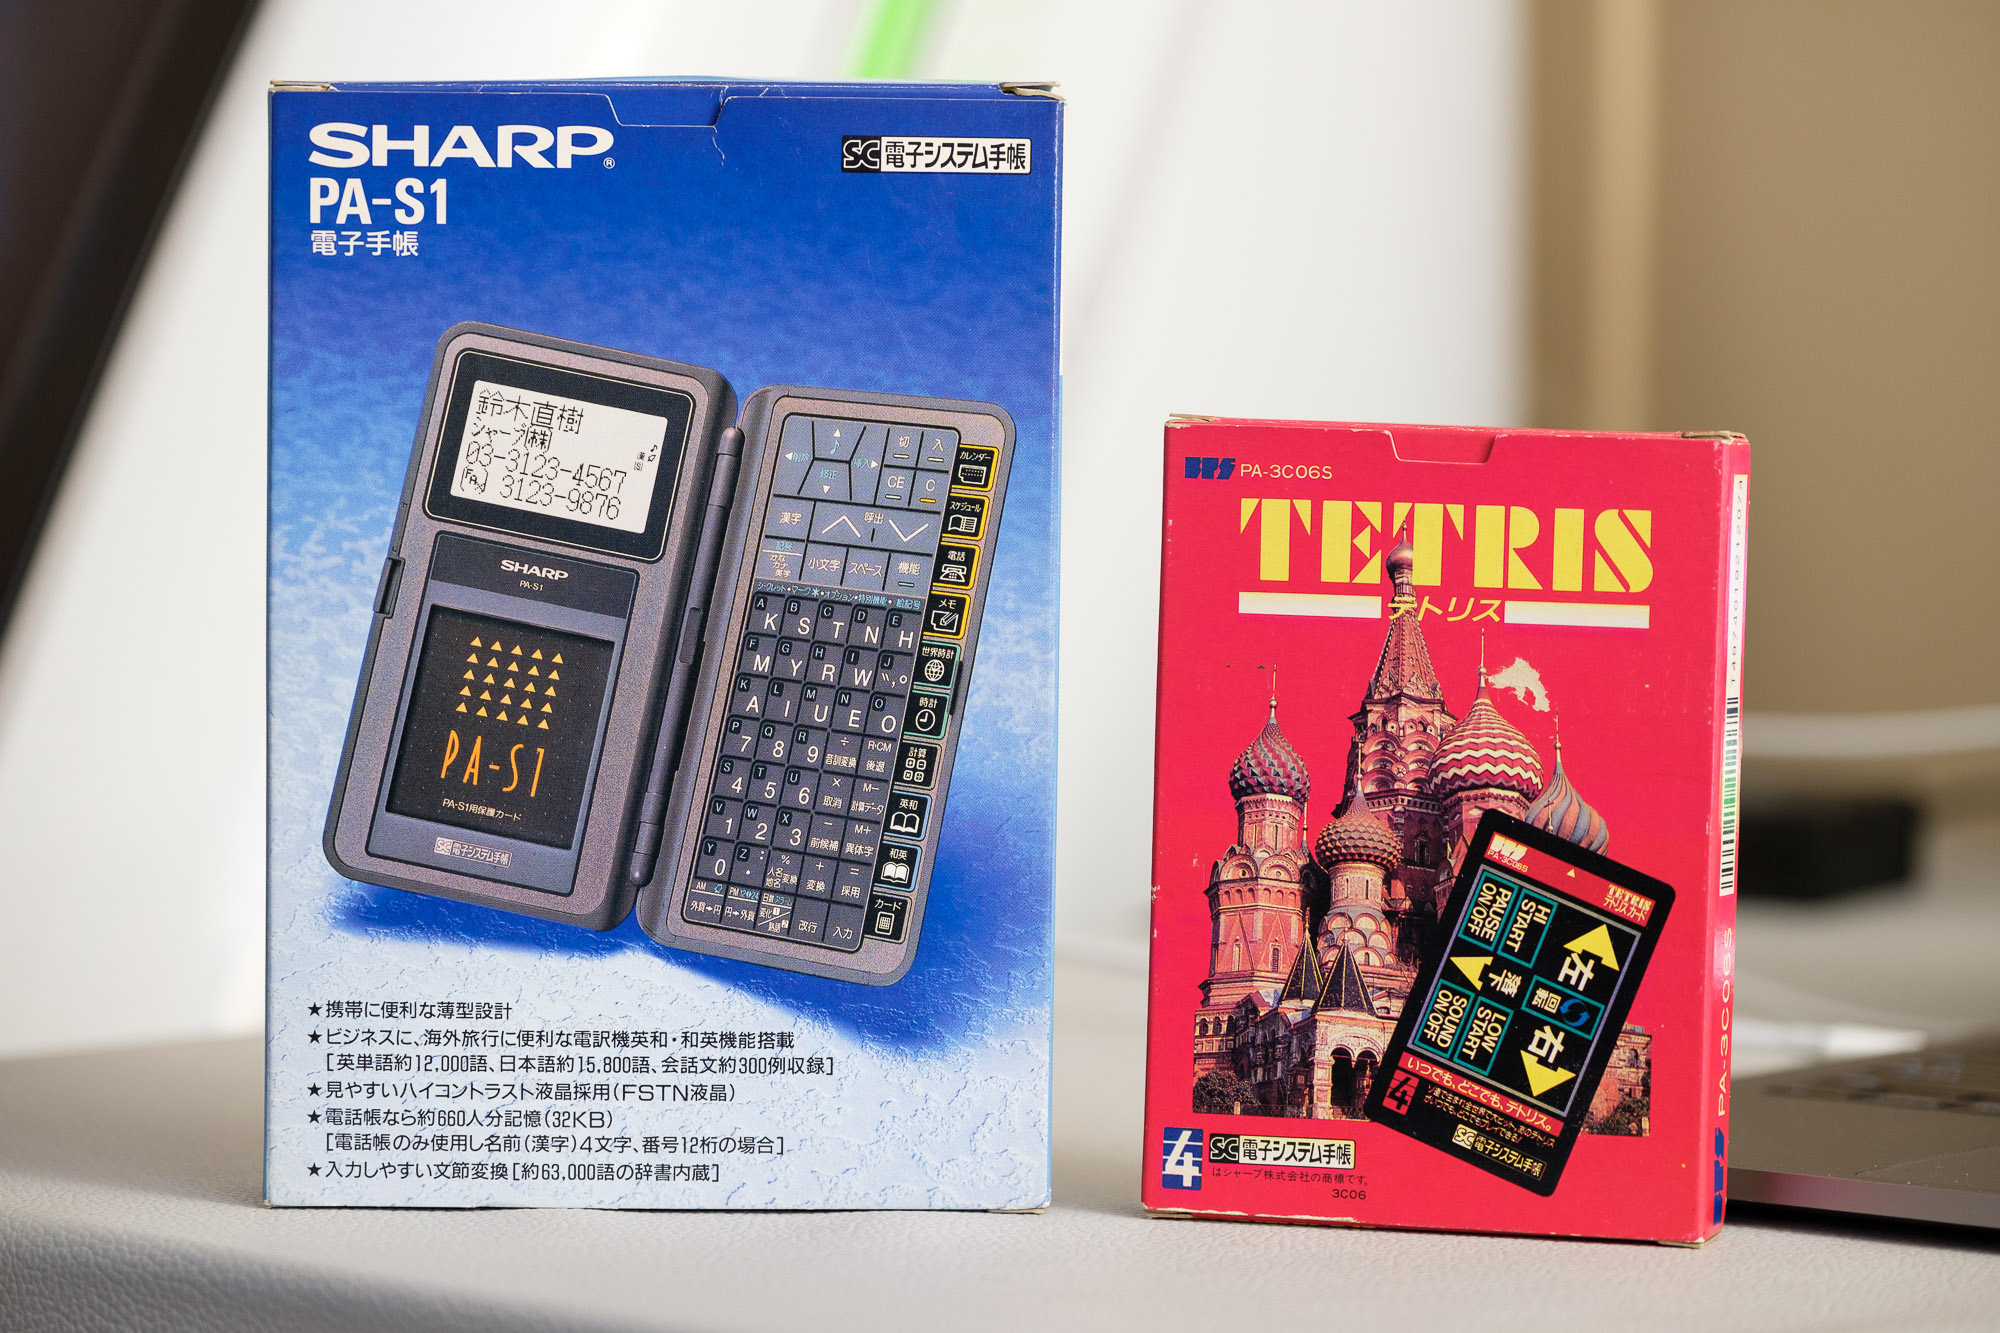 Tetris collection update, PDA Tetris!